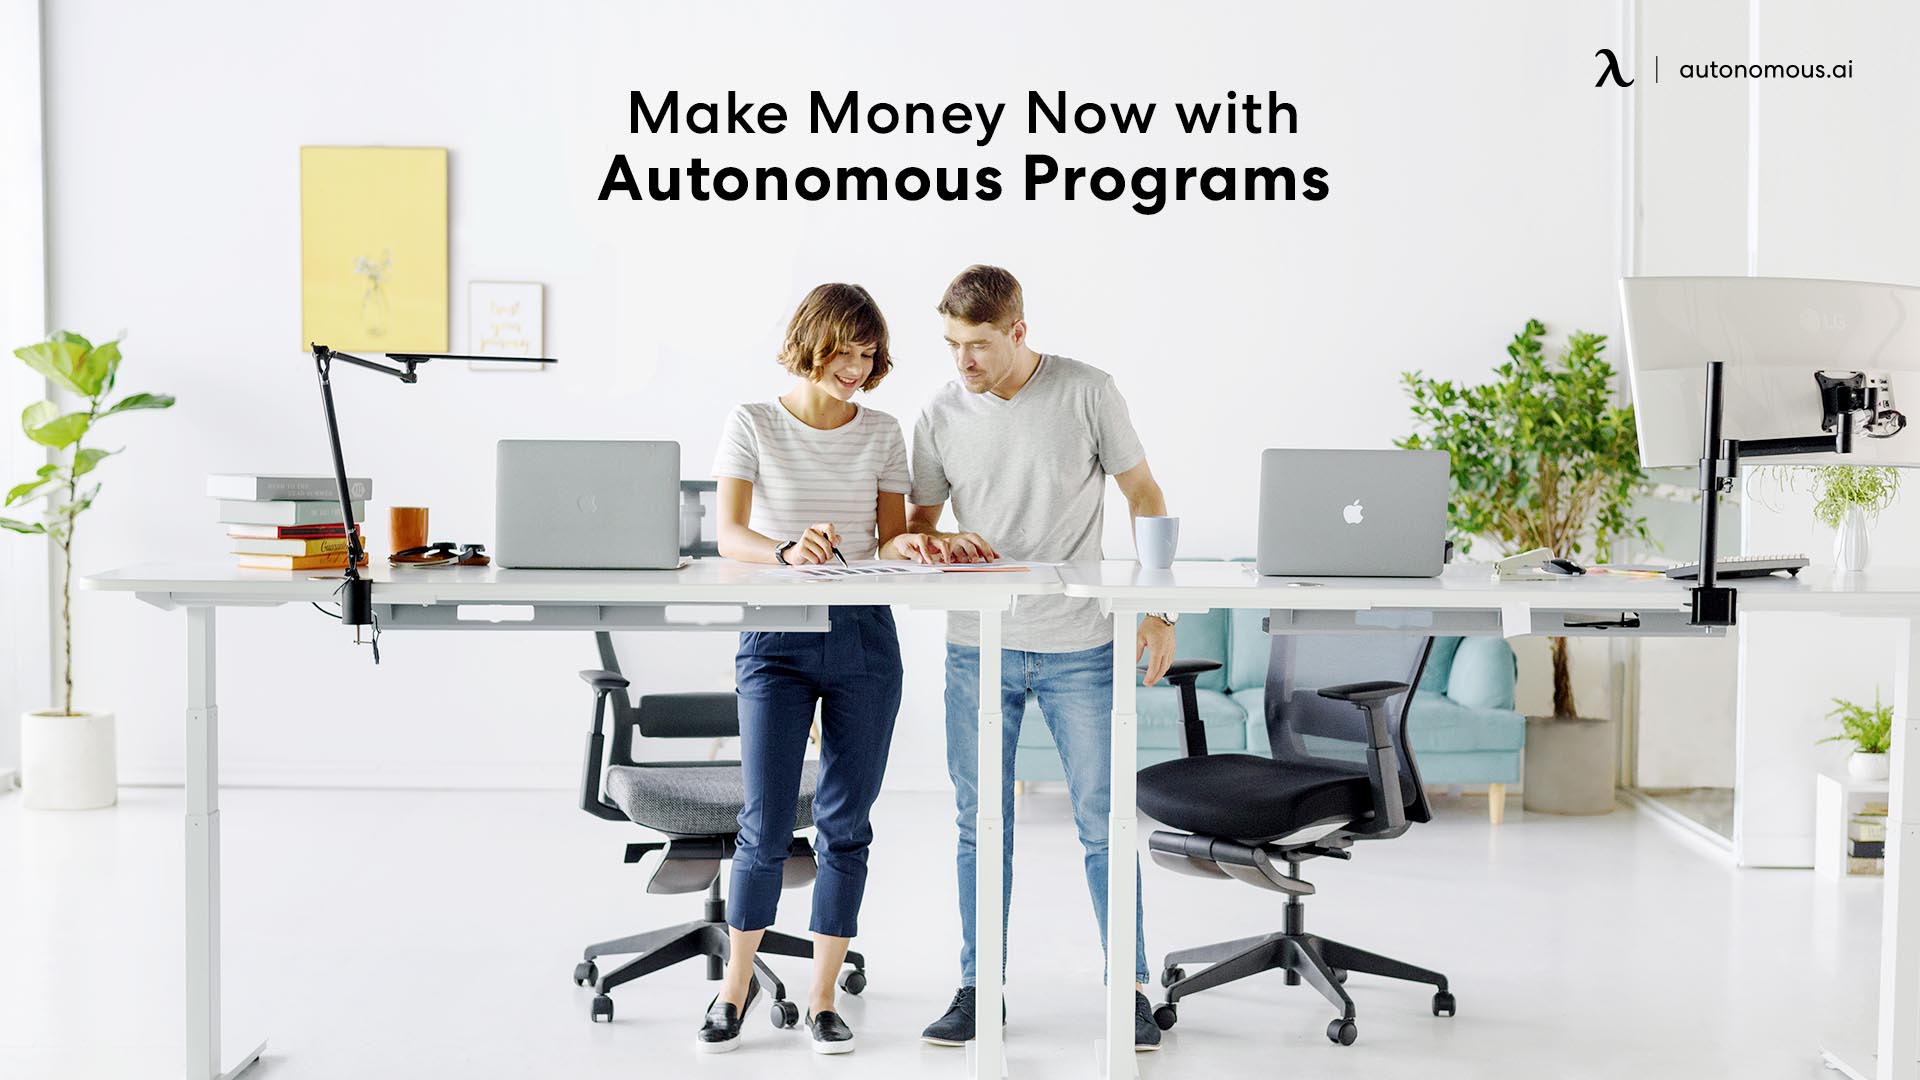 How You Can Make Money Now with Autonomous Programs